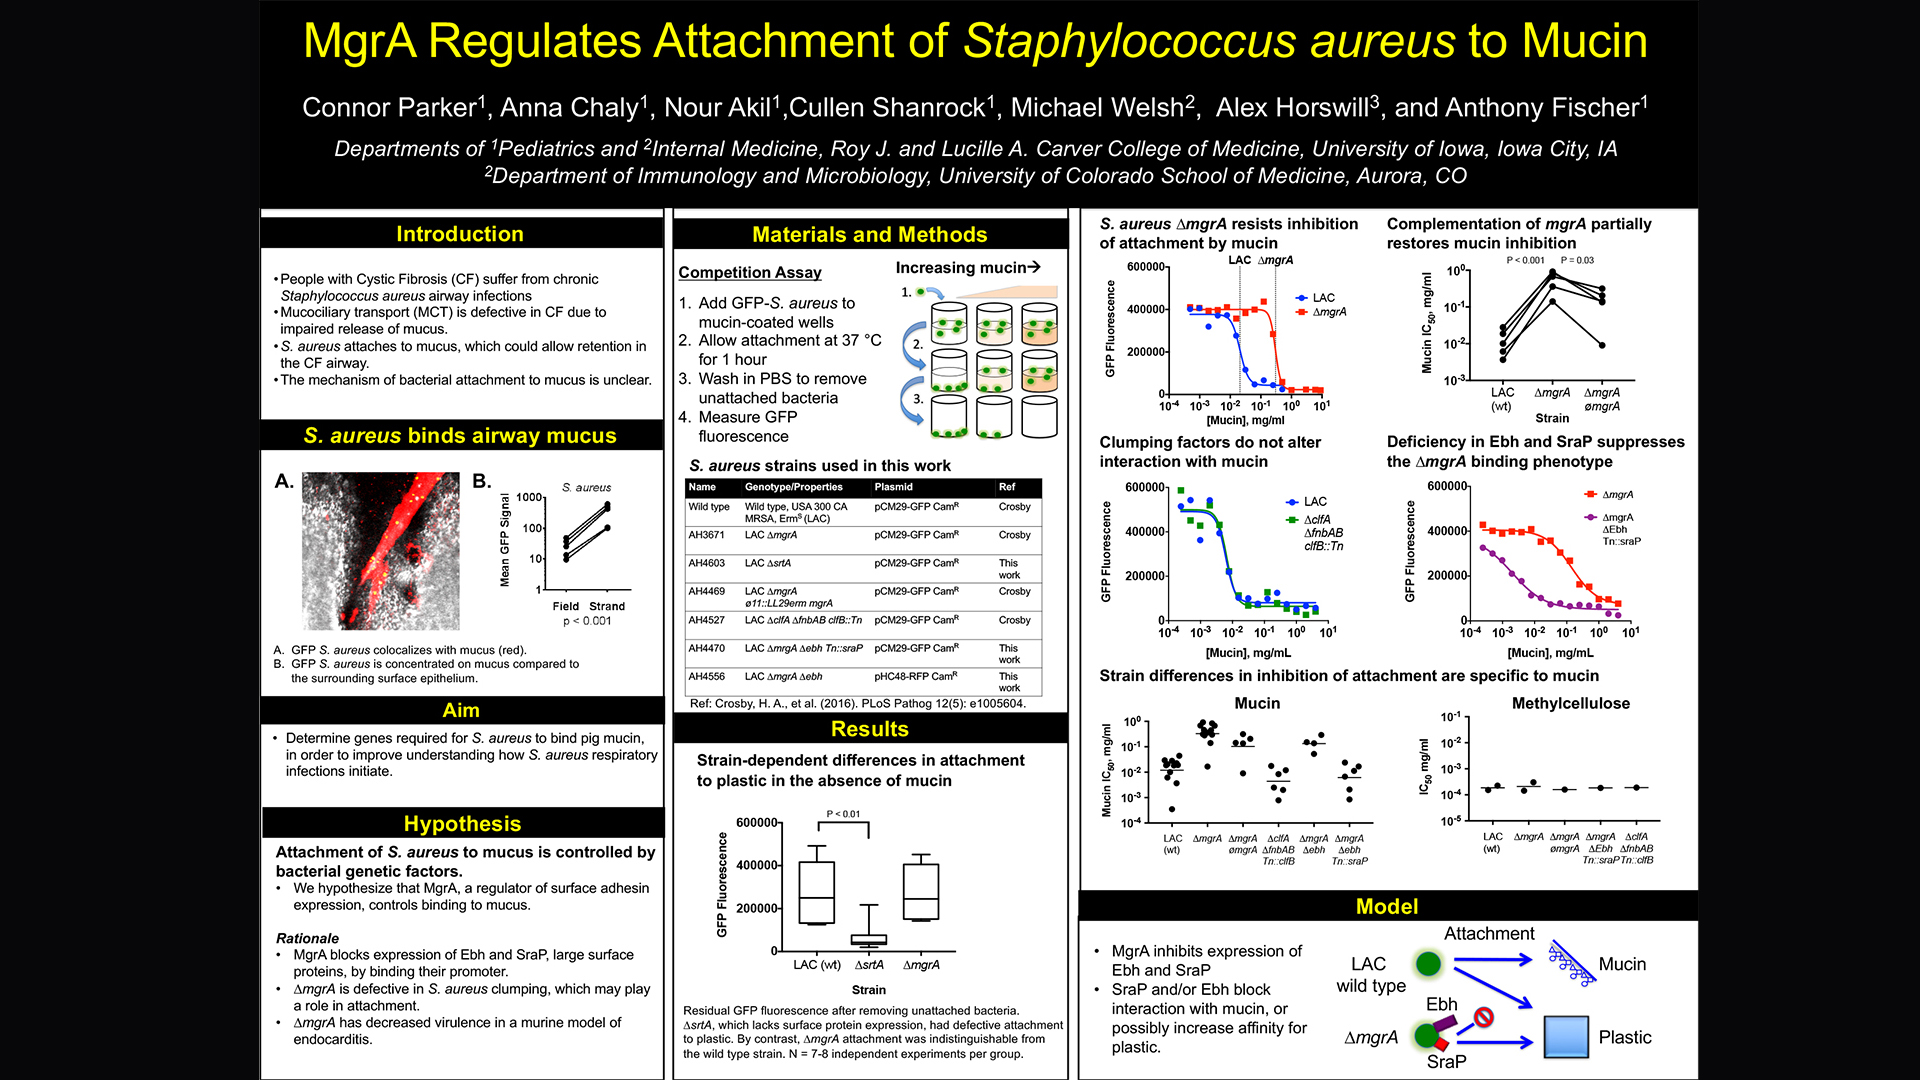 Parker: MgrA regulates attachment of Staphylococcus aureus to mucin